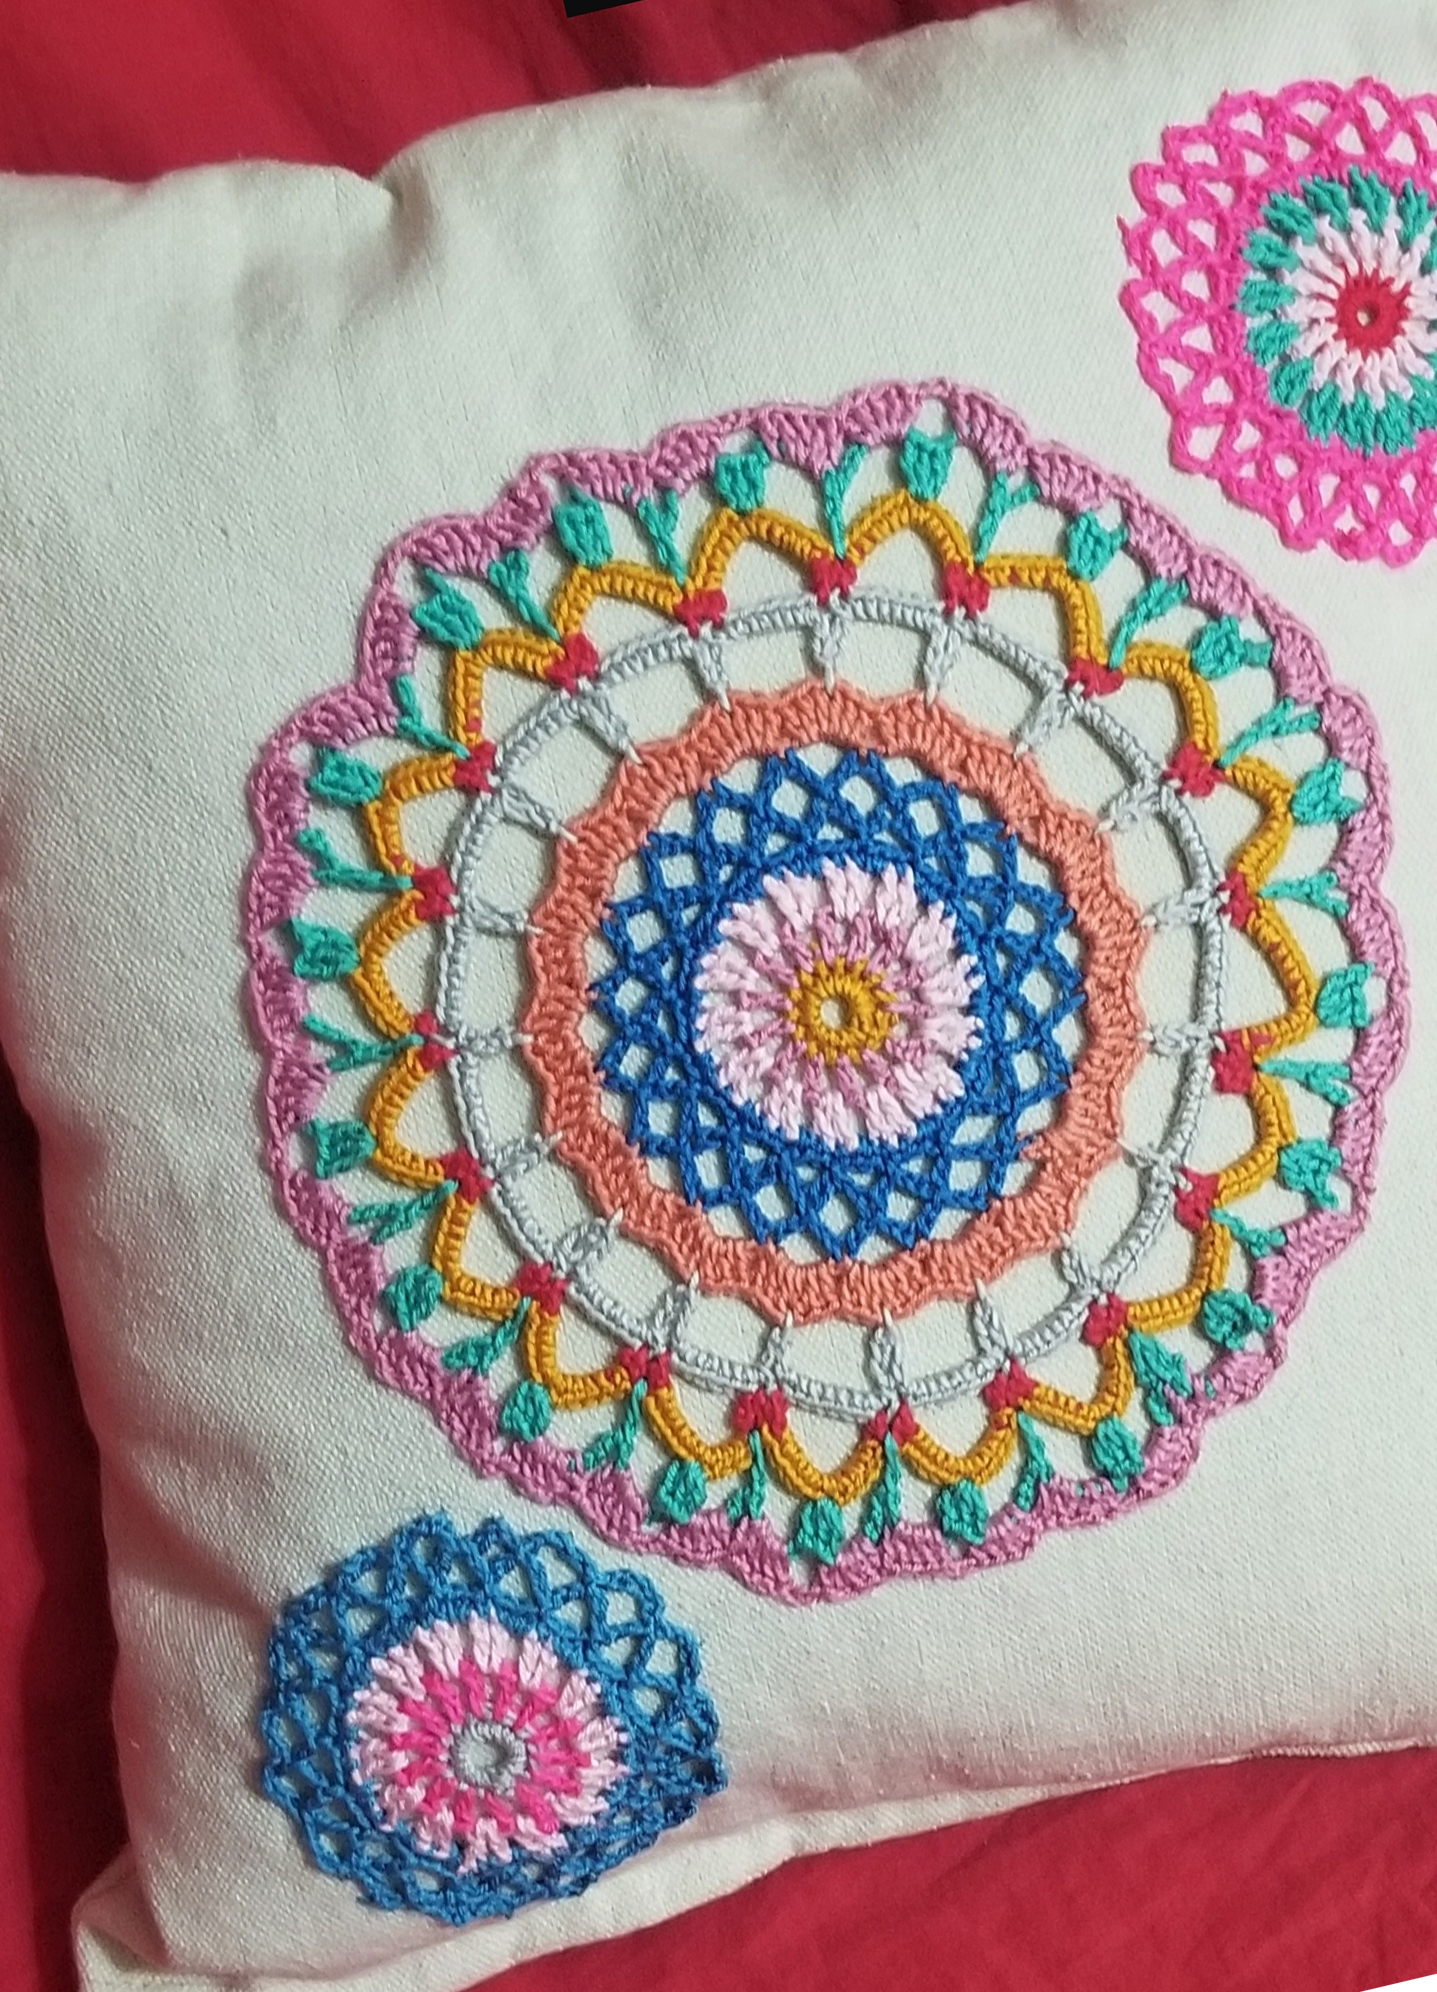 Cotton pillowcase with crochet units